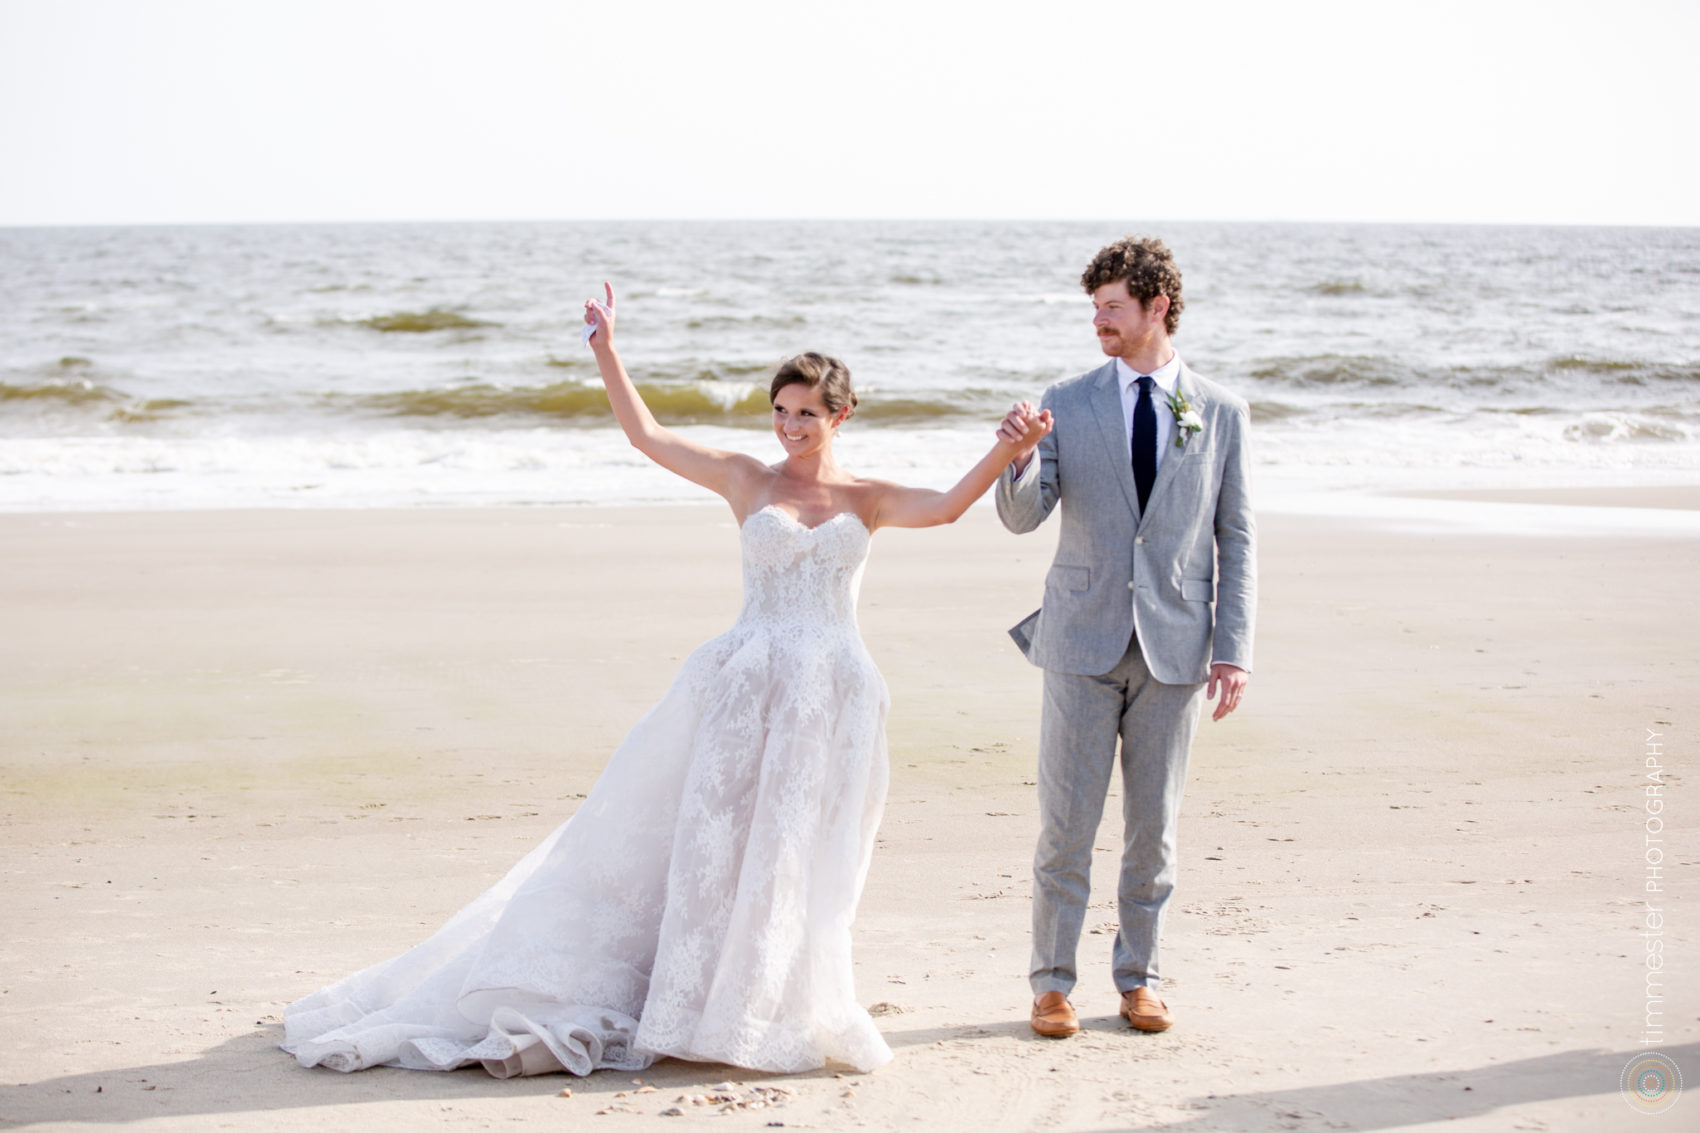 Wedding ceremony on the beach at Bald Head Island, NC